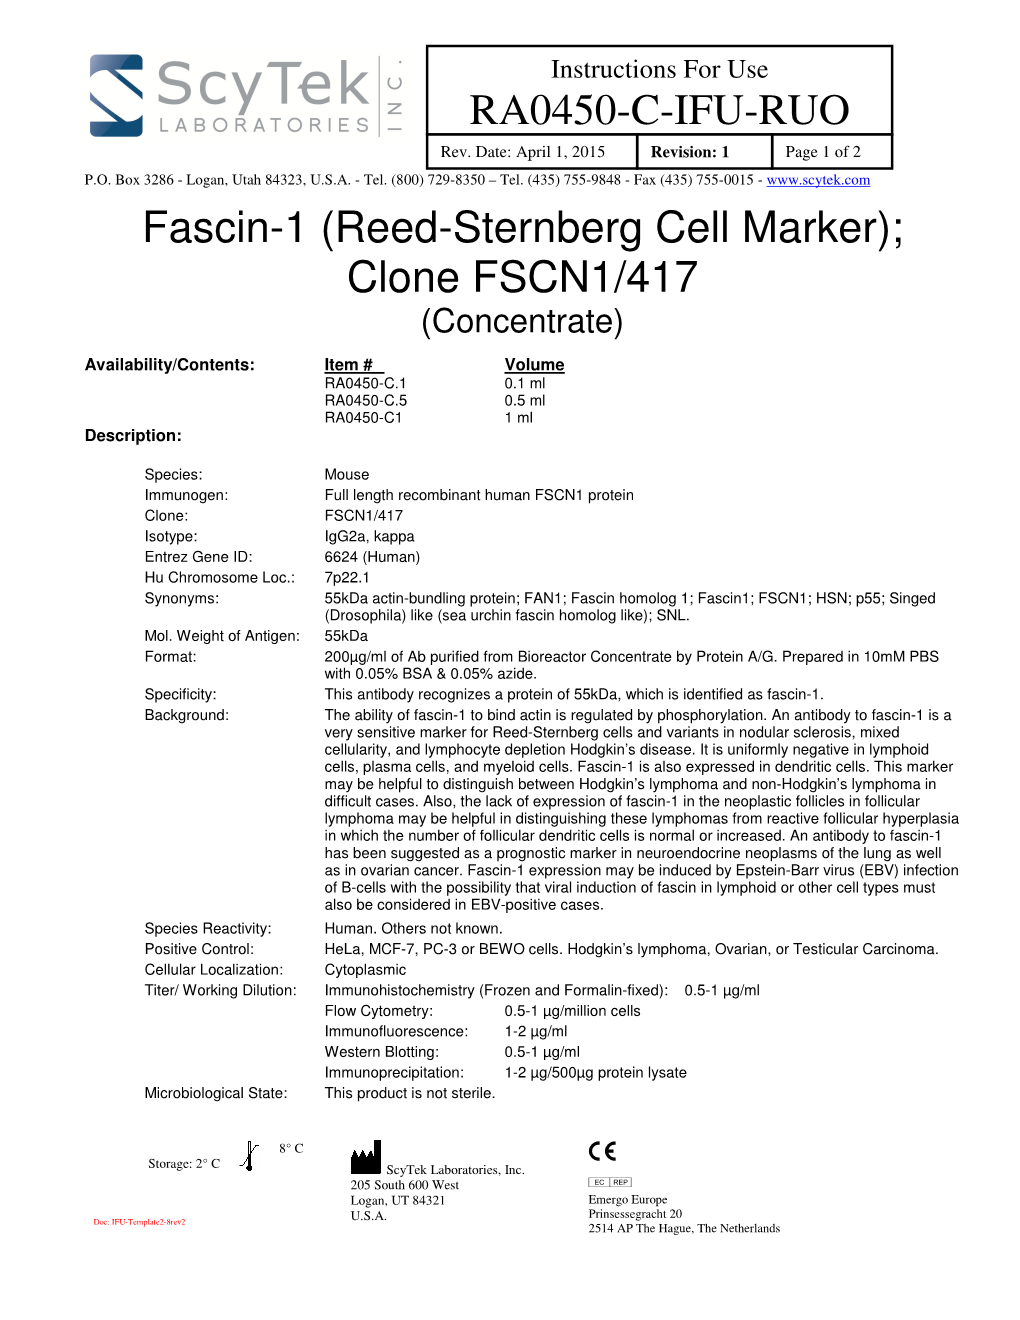 RA0450-C-IFU-RUO Fascin-1 (Reed-Sternberg Cell Marker); Clone FSCN1/417